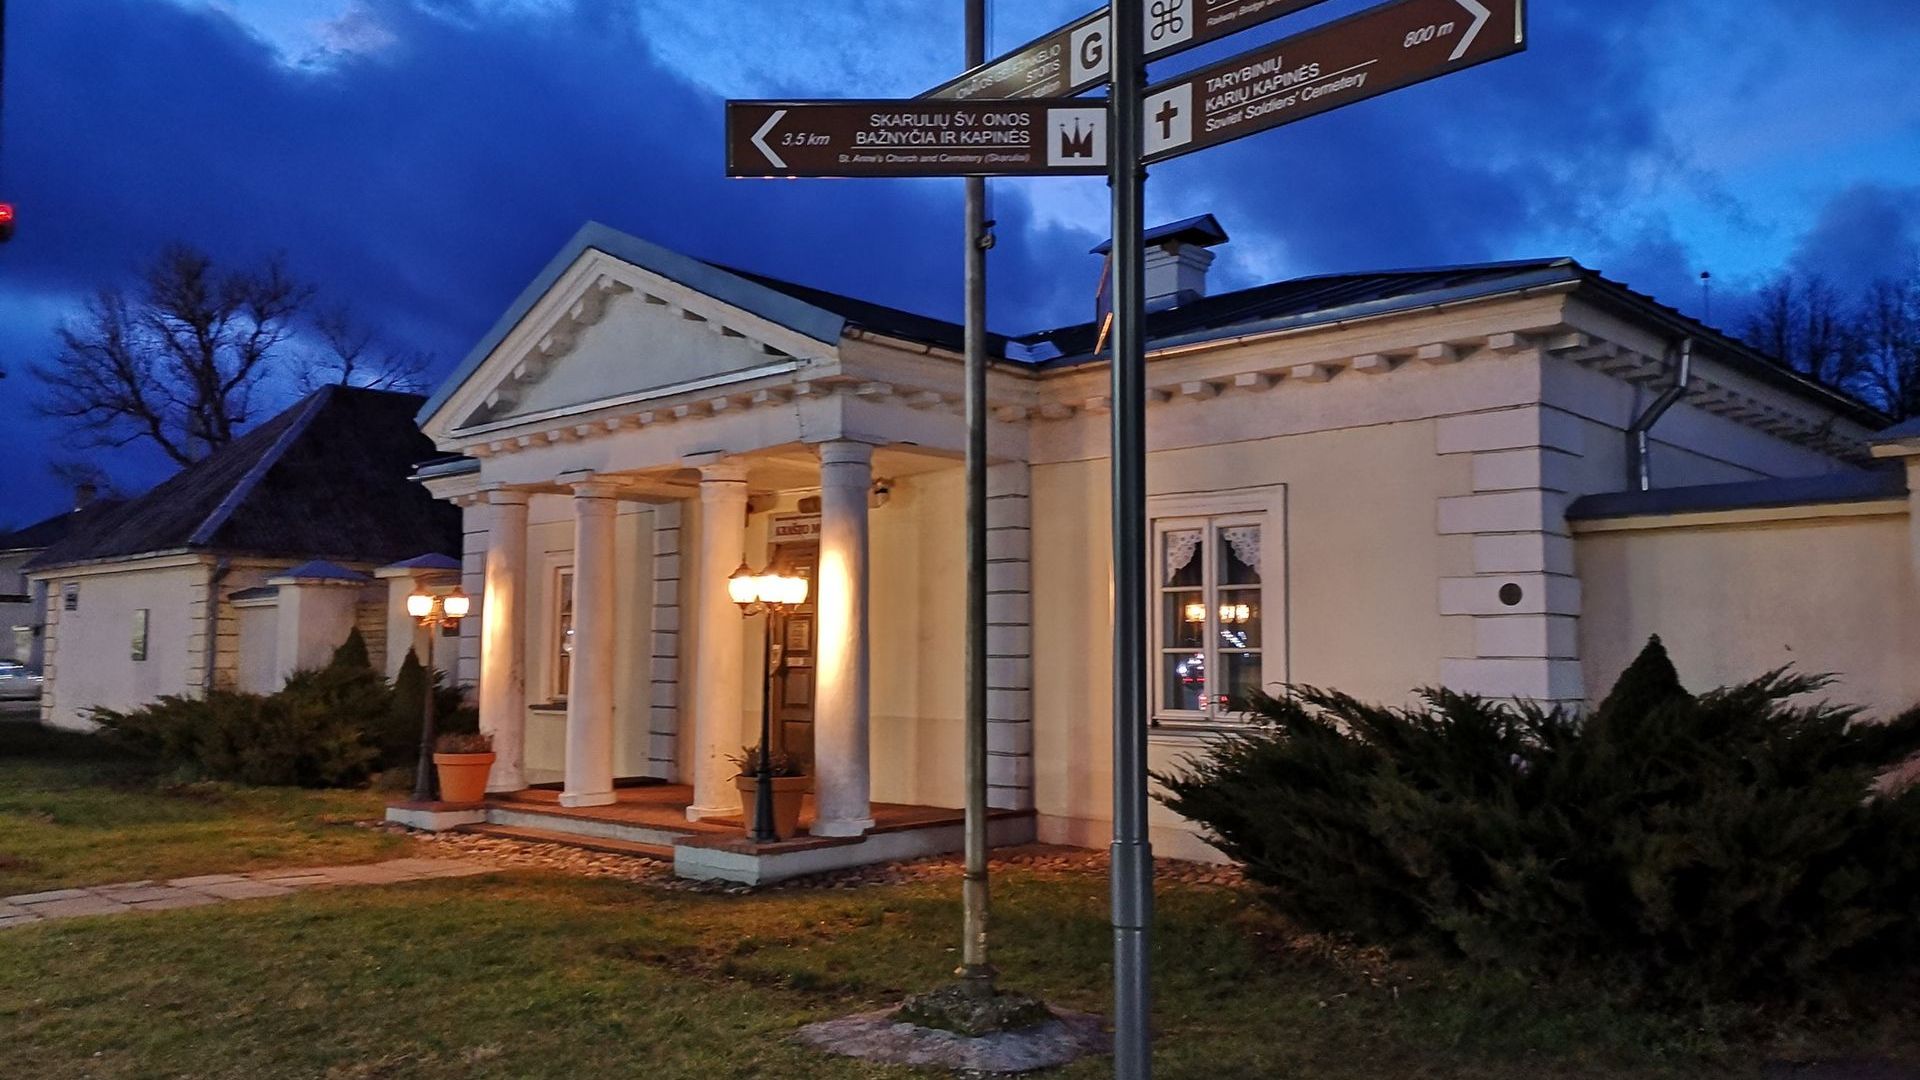 Jonava Tourism Information Centre